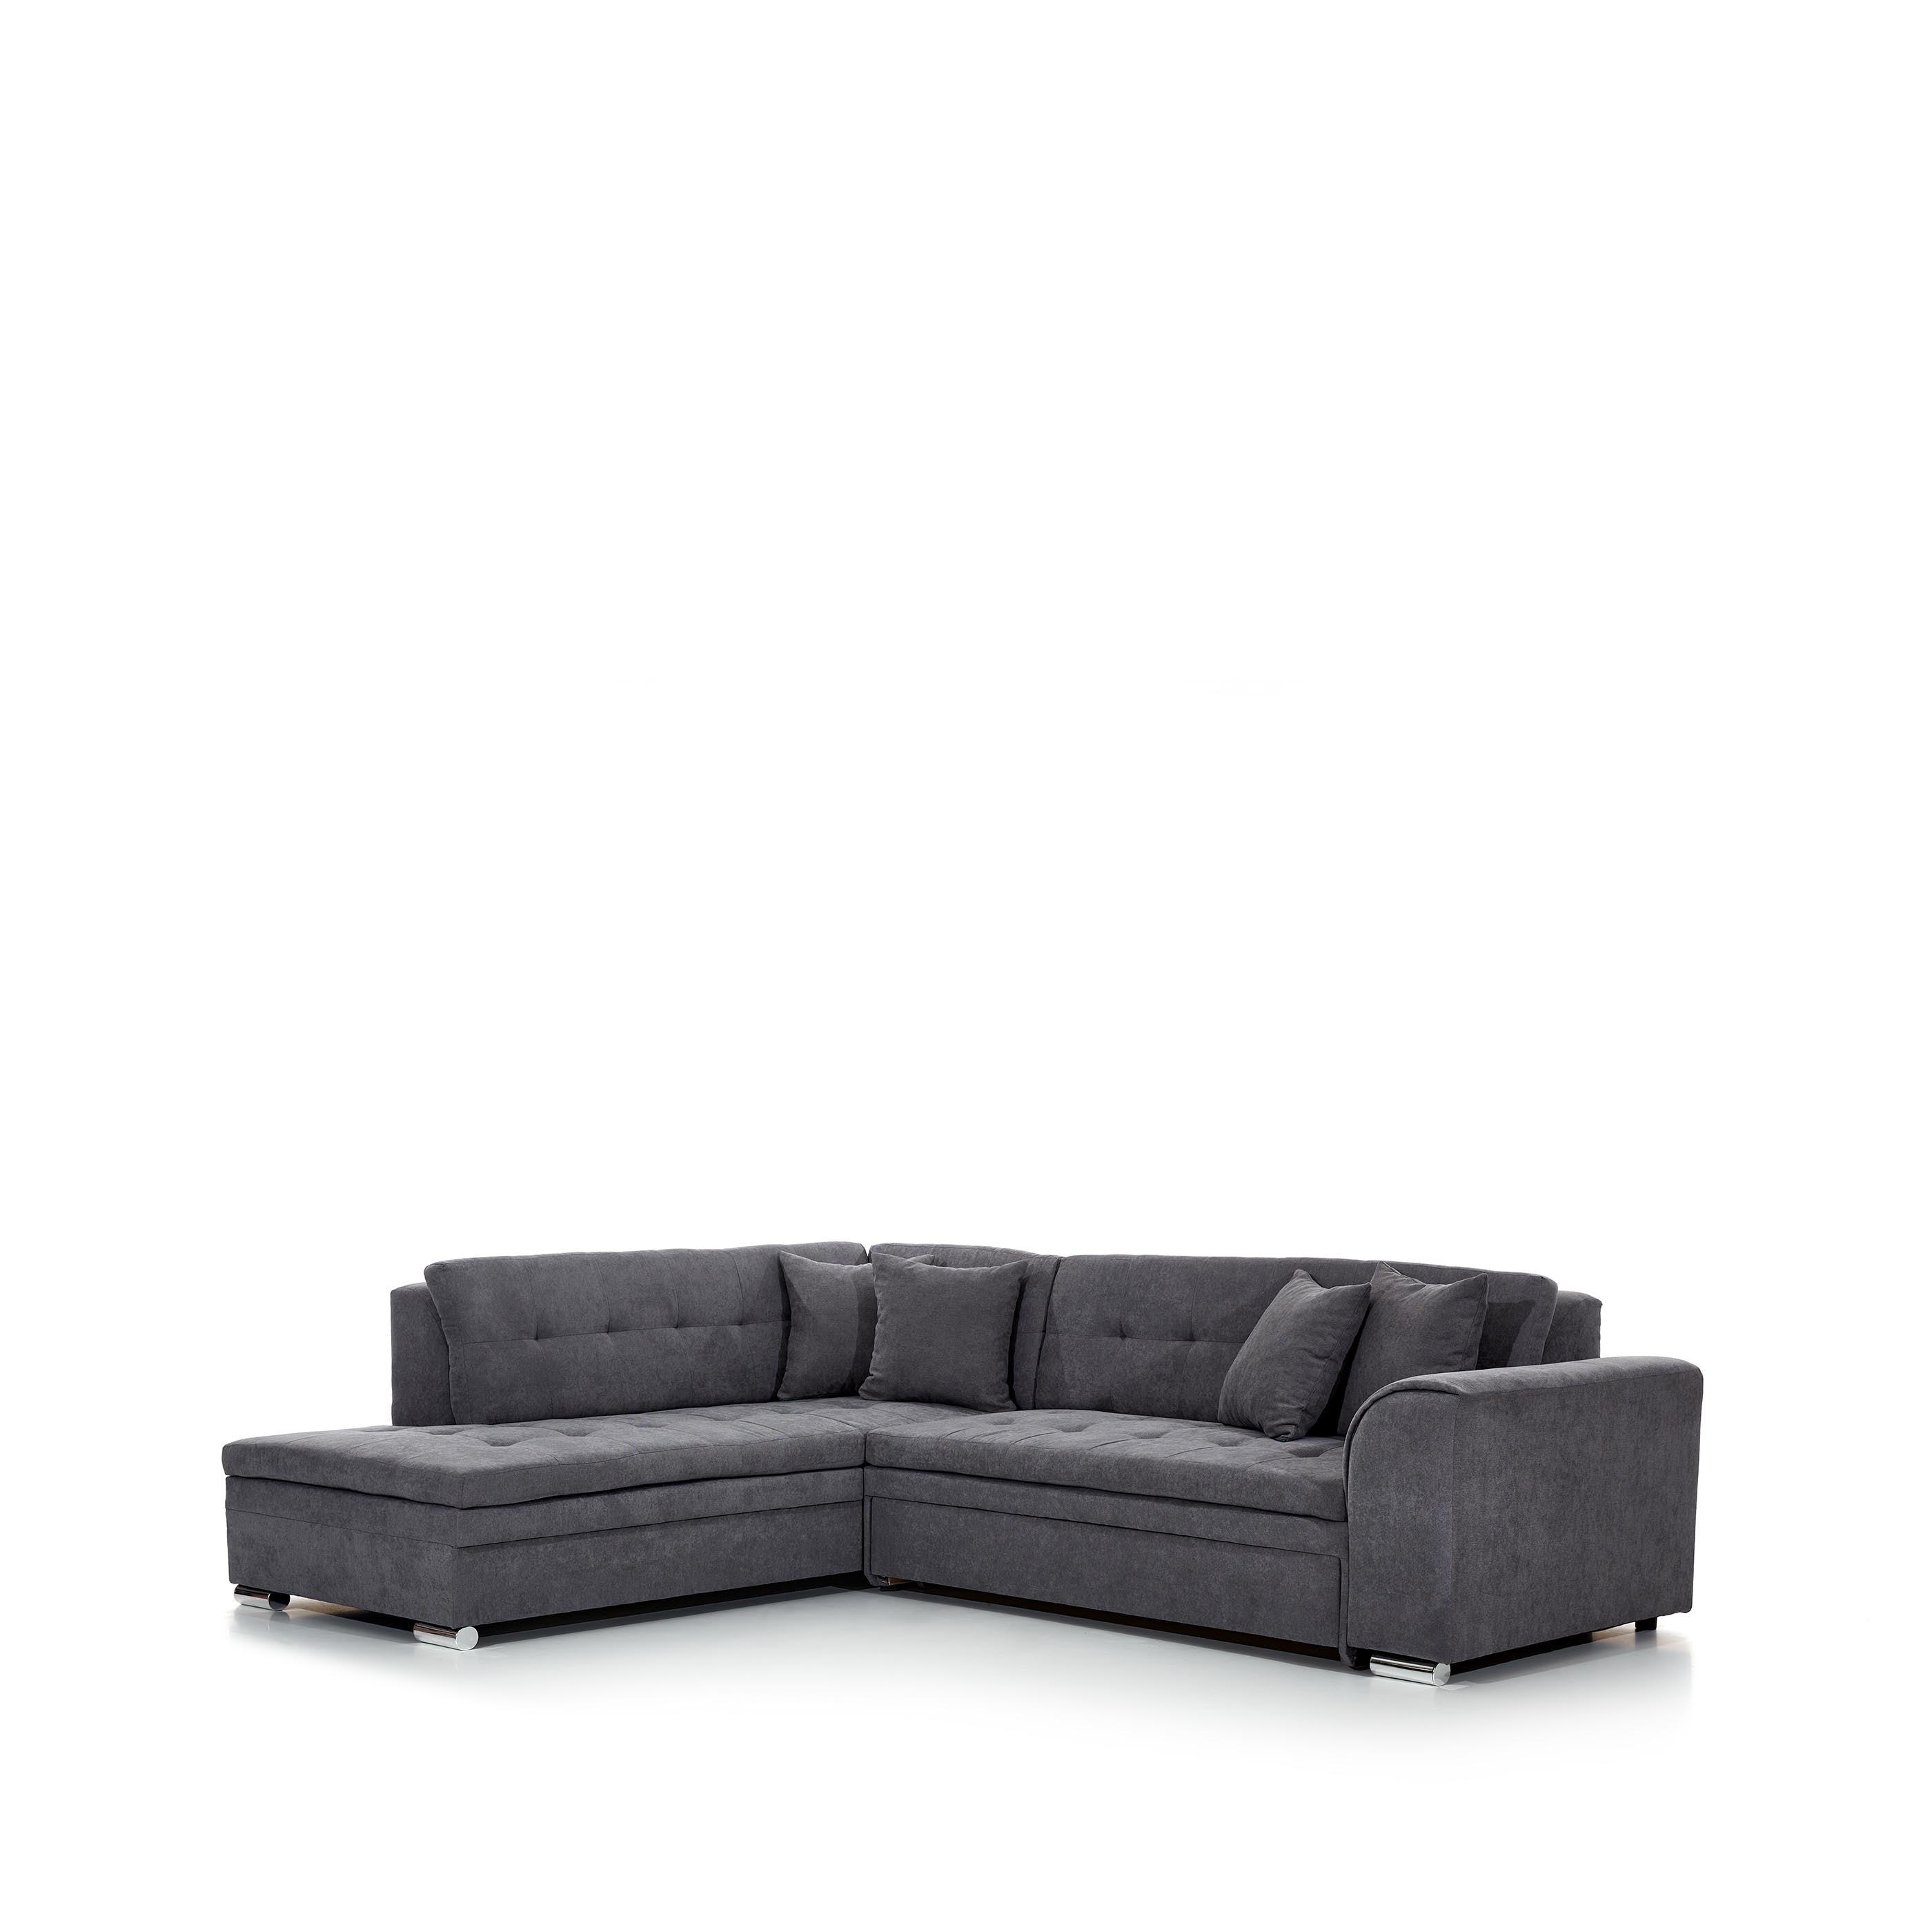 Corner sofa bed with chest-Pieretta